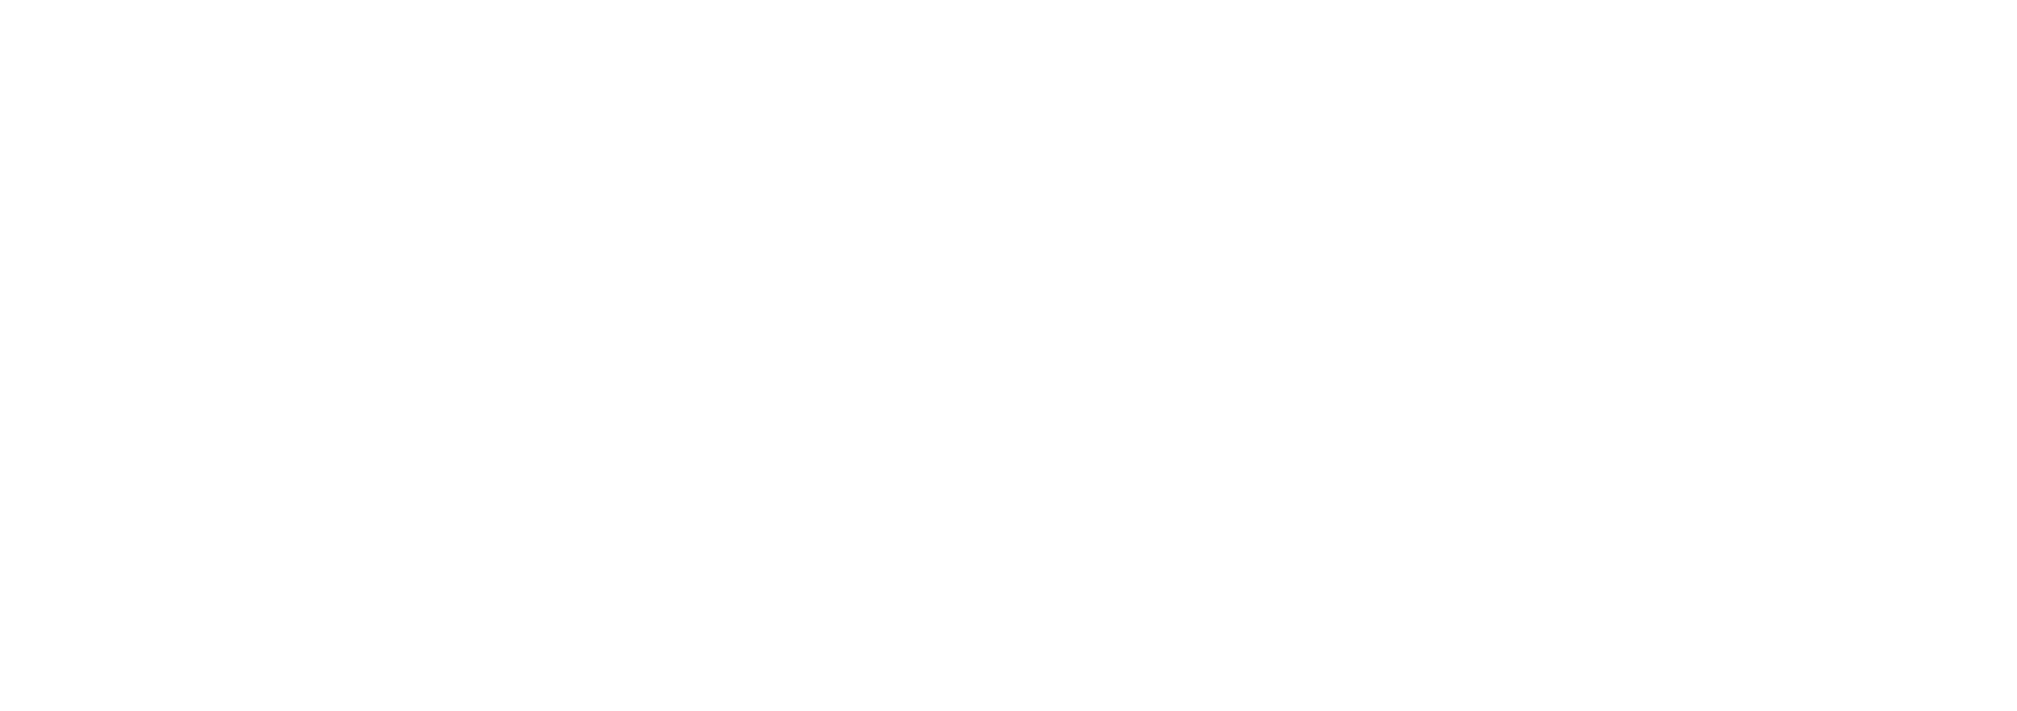 Dak's Flowers